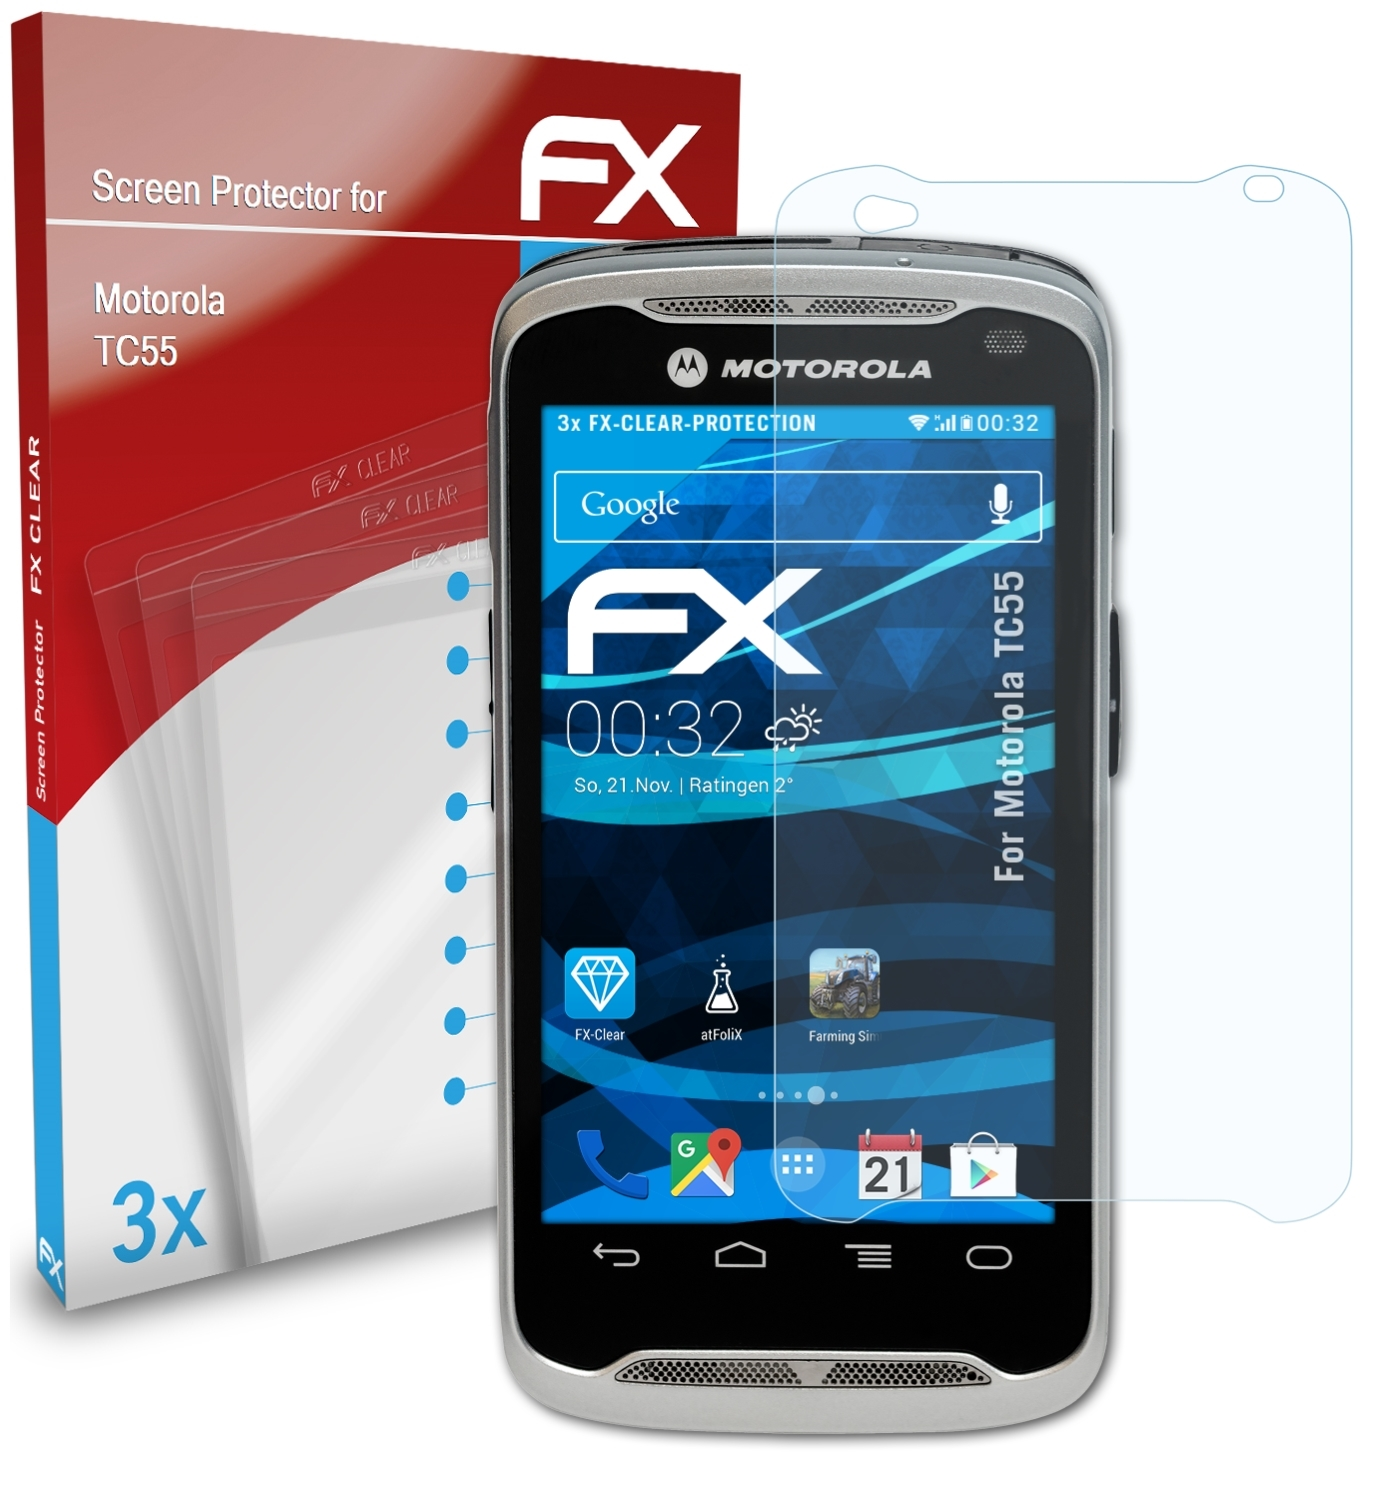 TC55) 3x Displayschutz(für Motorola ATFOLIX FX-Clear